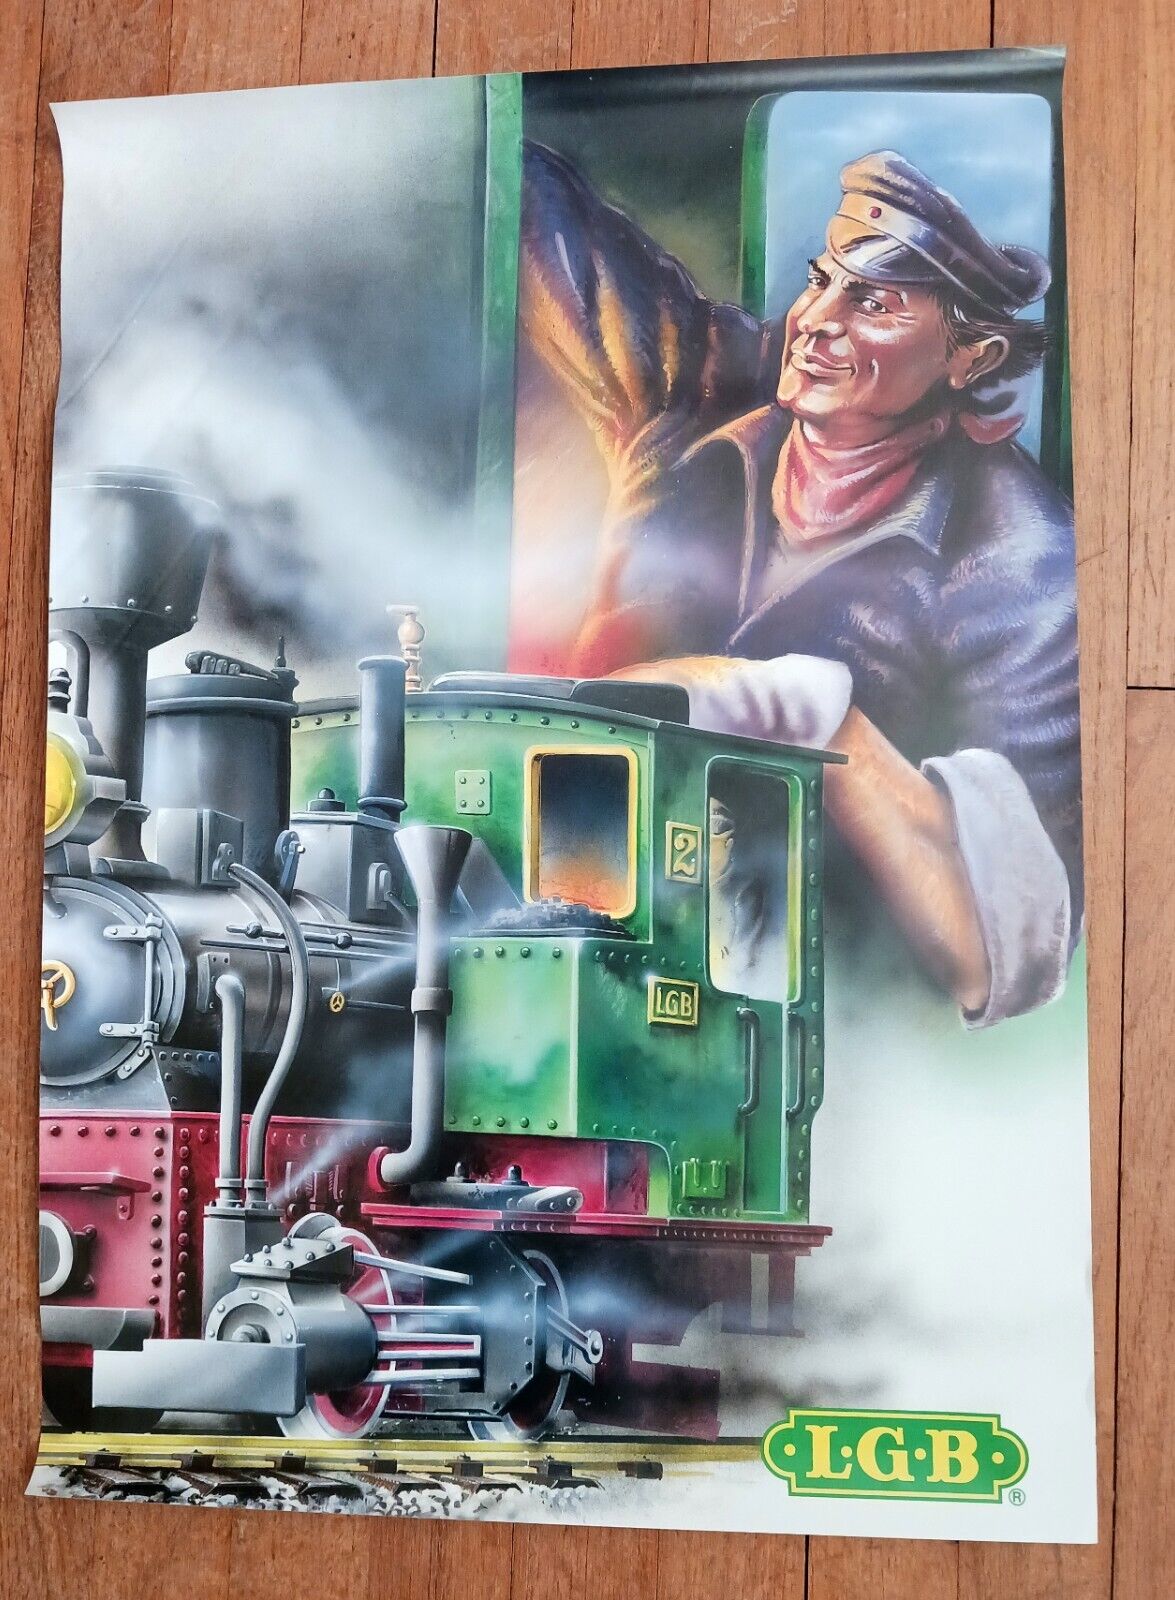 Lehmann Gross Bahn LGB Poster 81021 Steam Train Engineer Model Railroad